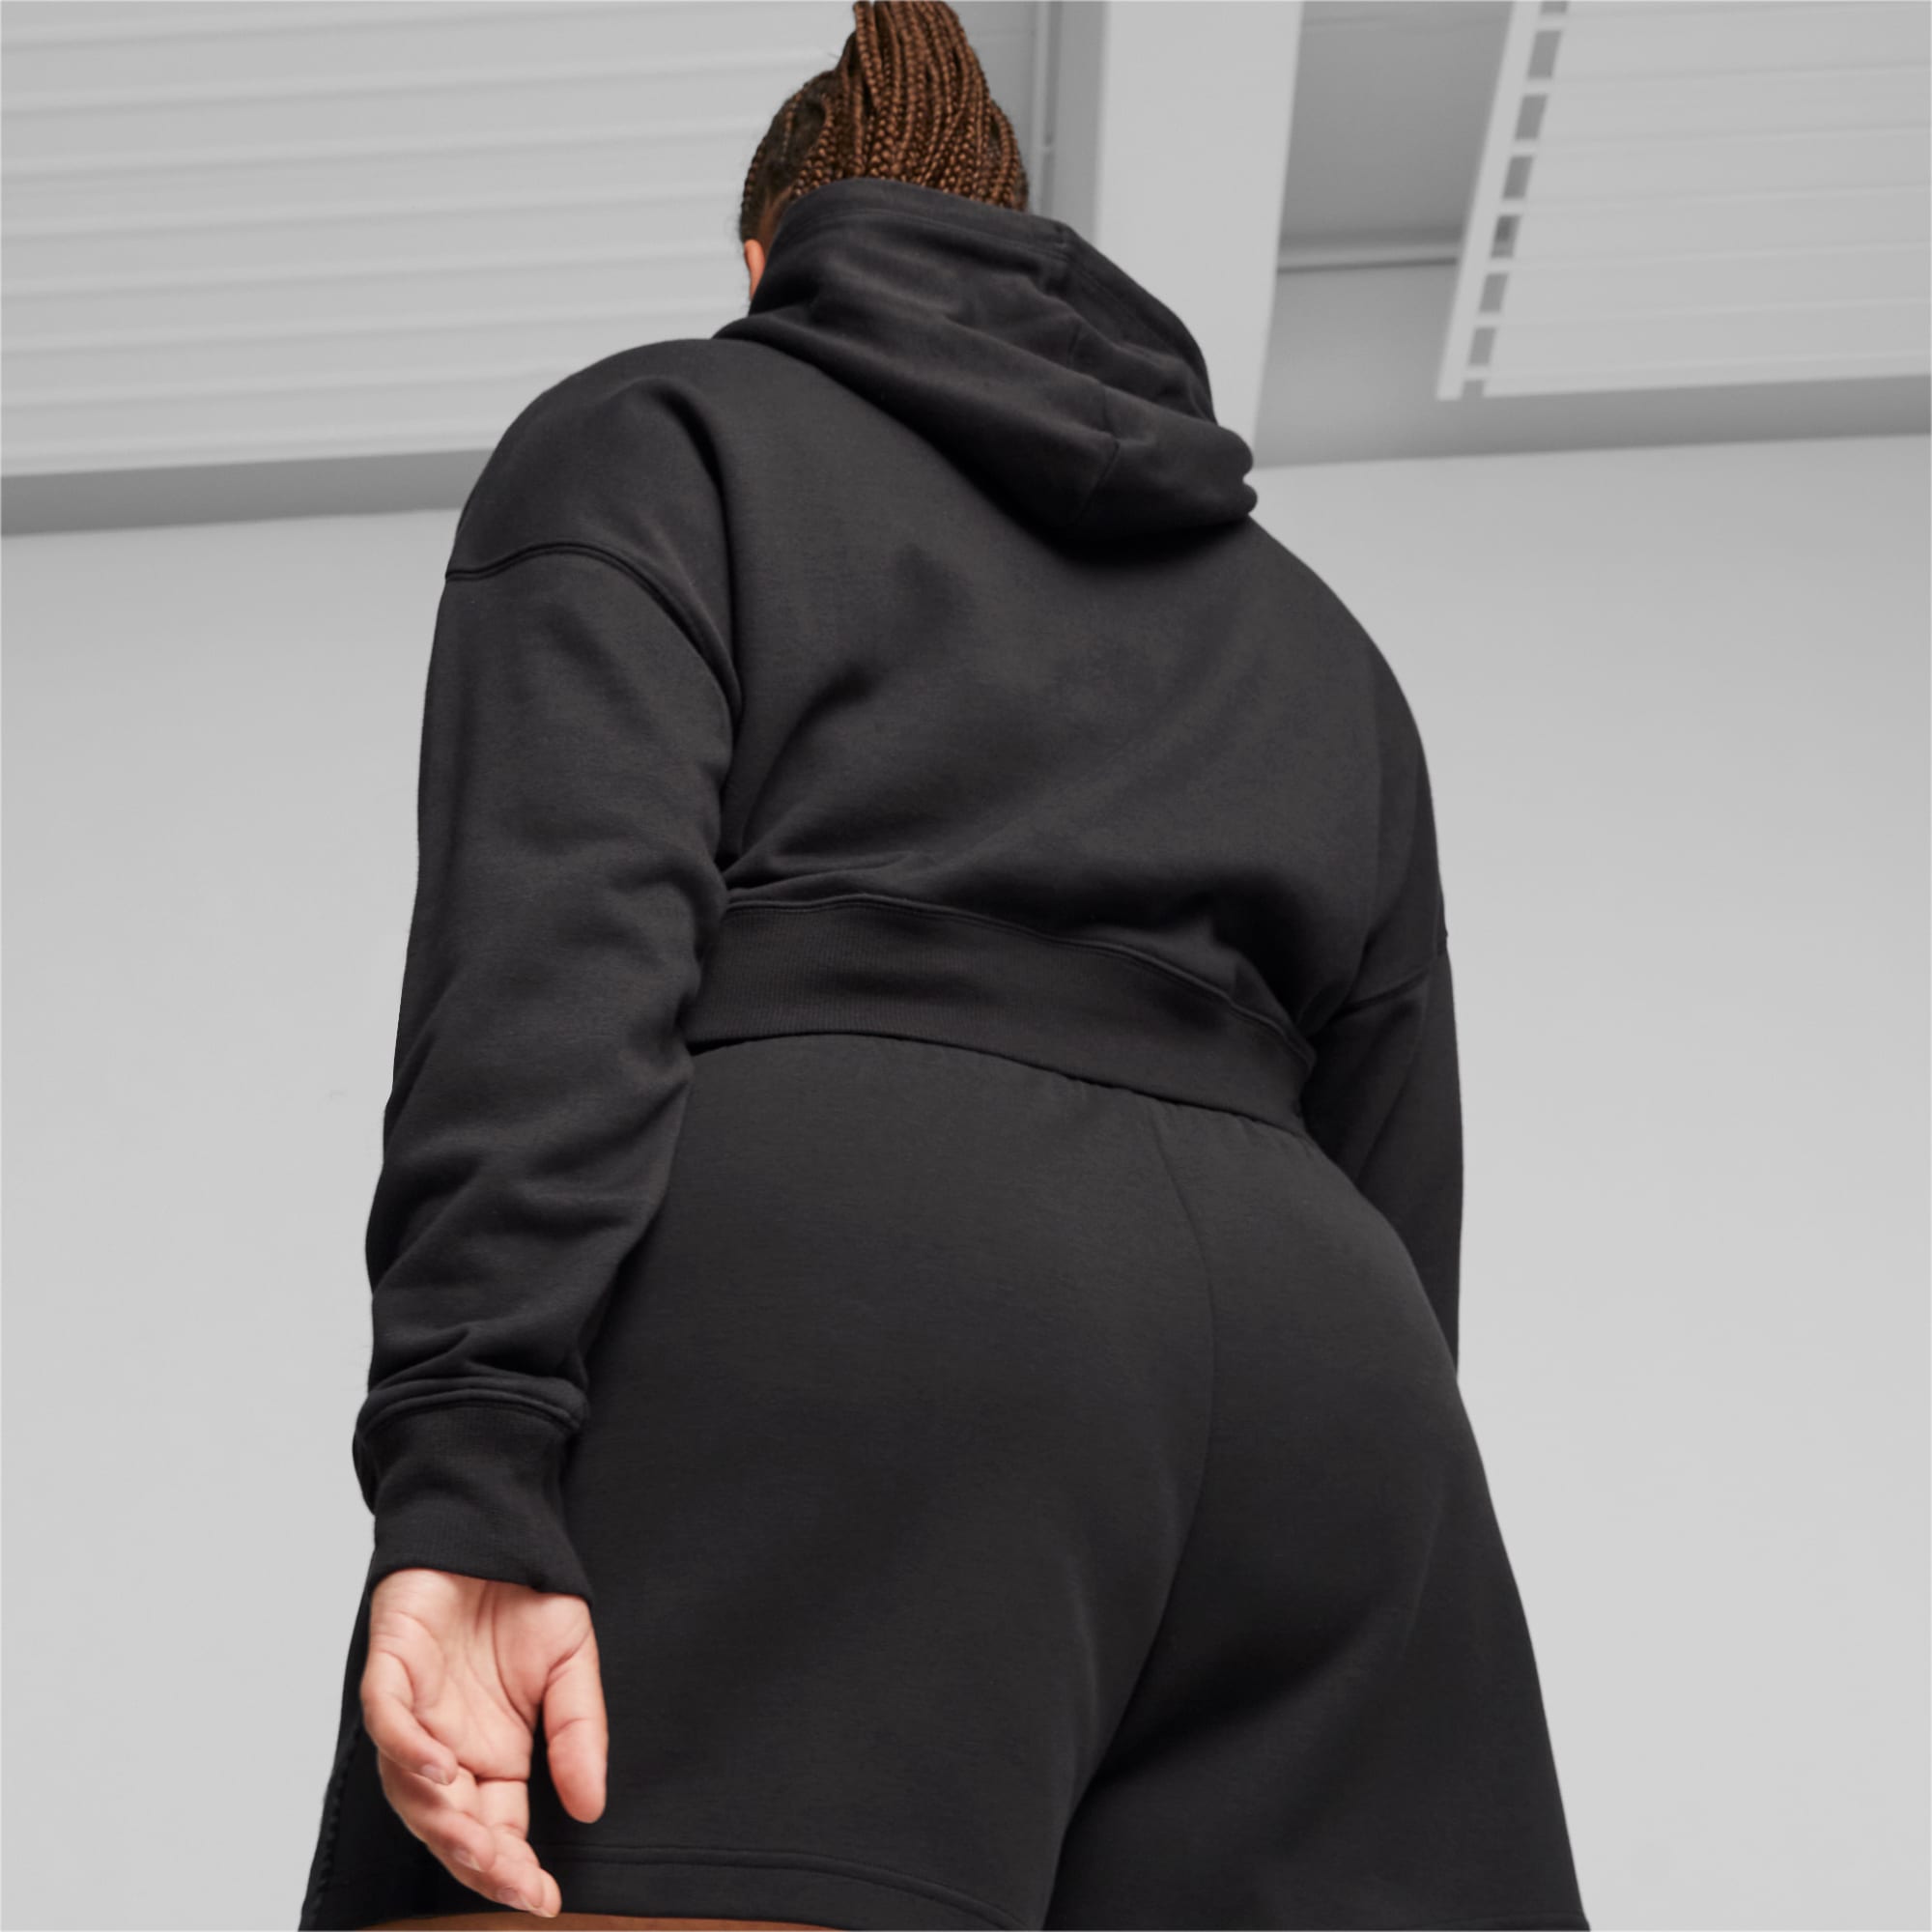 PUMA Classics Women's Cropped Hoodie, Black, Size XS, Clothing